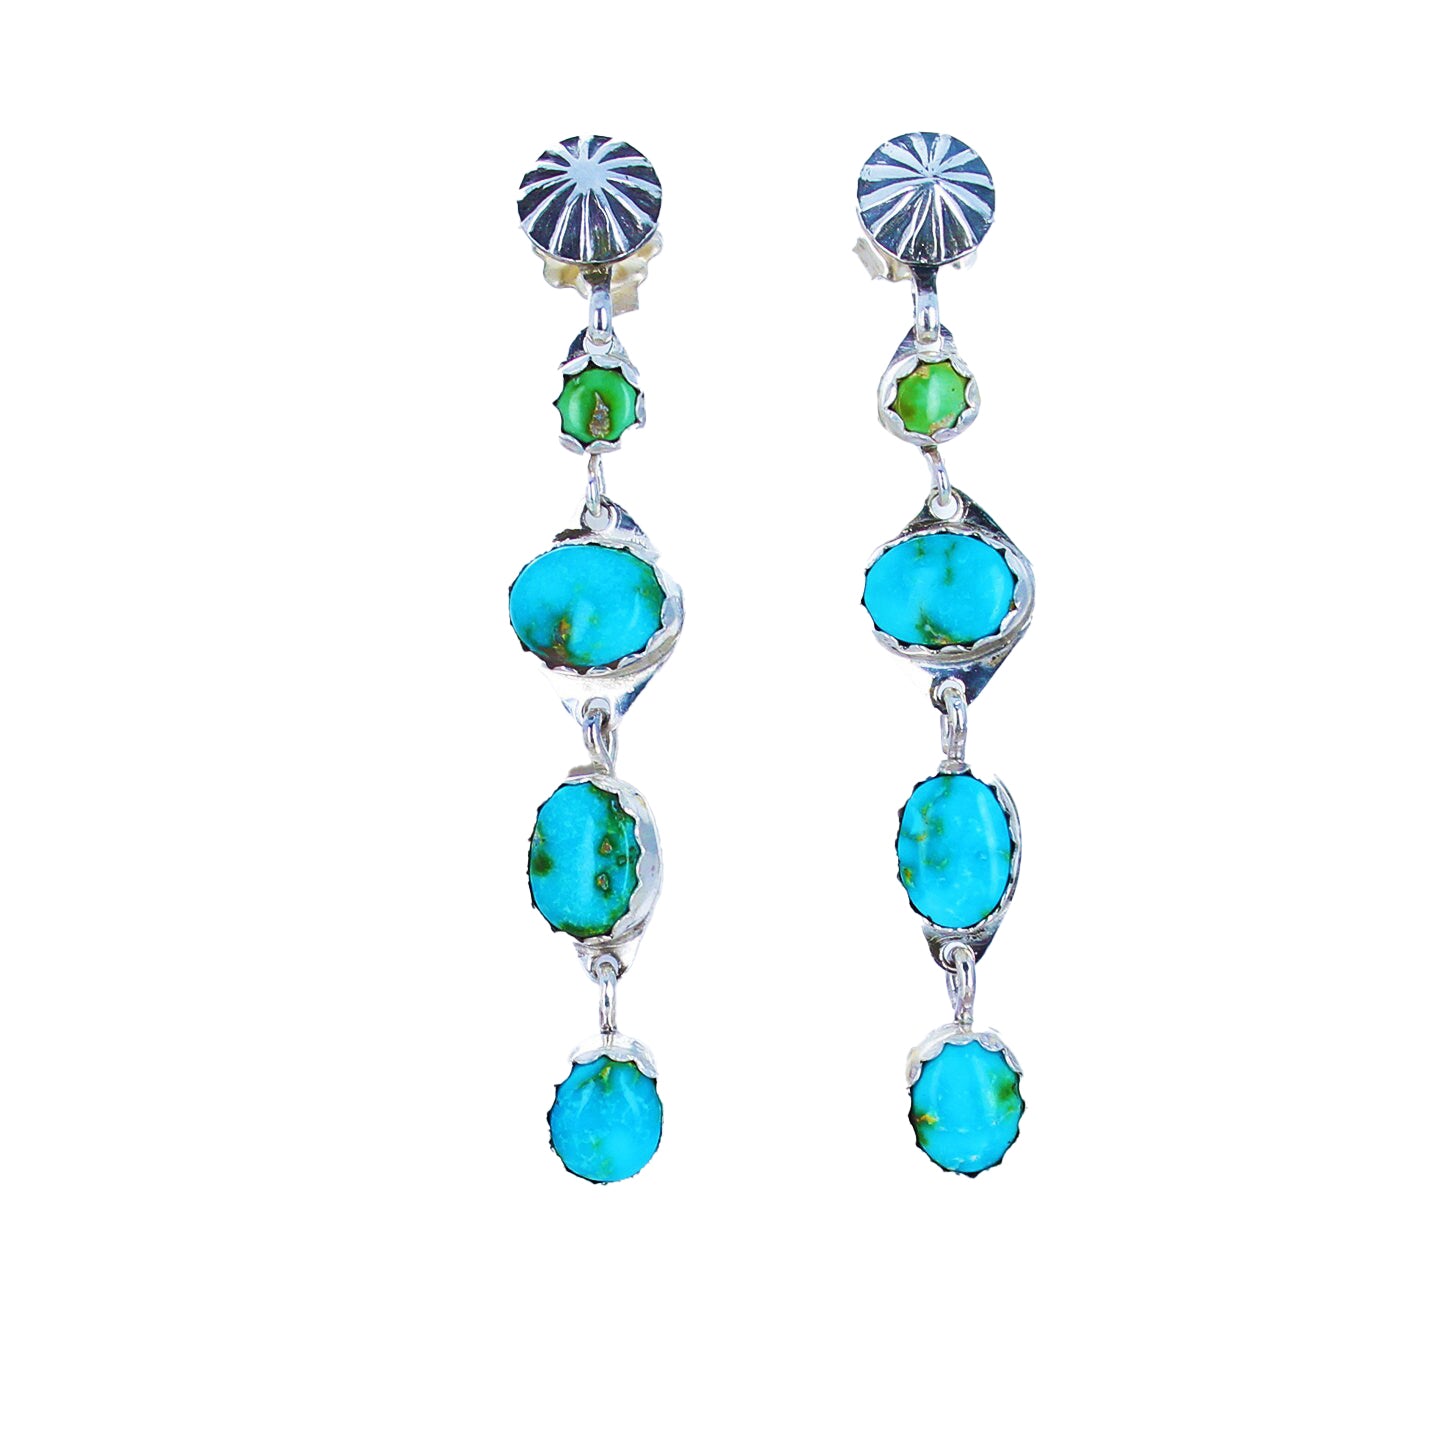 Sonoran Mountain Turquoise Earrings 4 Stone Dangles Sunburst Post